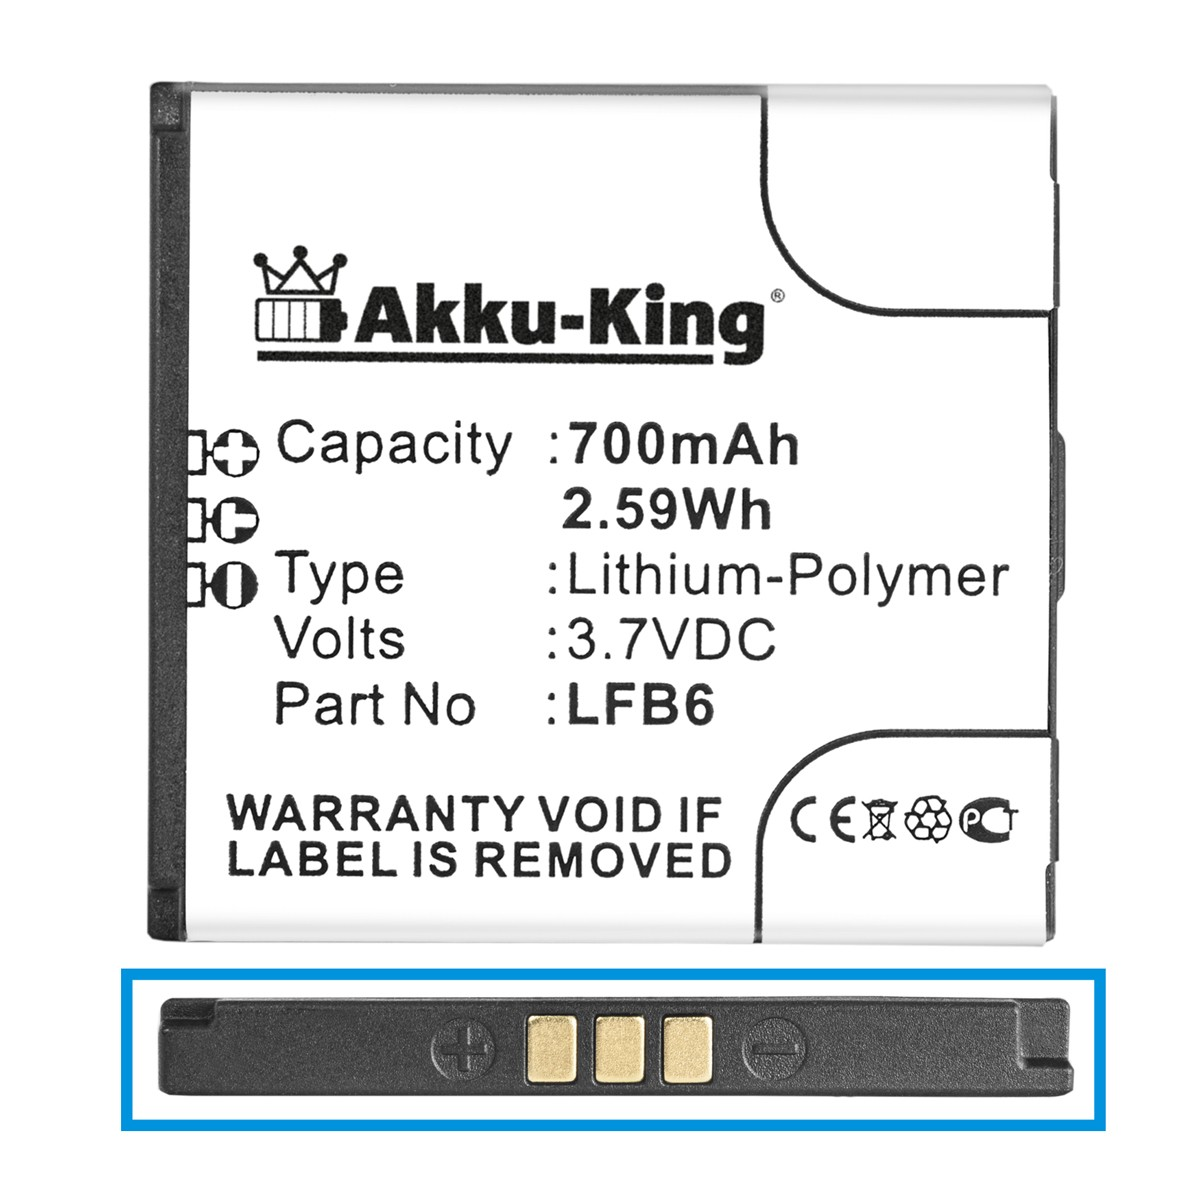 mit Li-Ion 3.7 kompatibel Handy-Akku, Akku Kazam AKKU-KING Volt, LFB6 700mAh